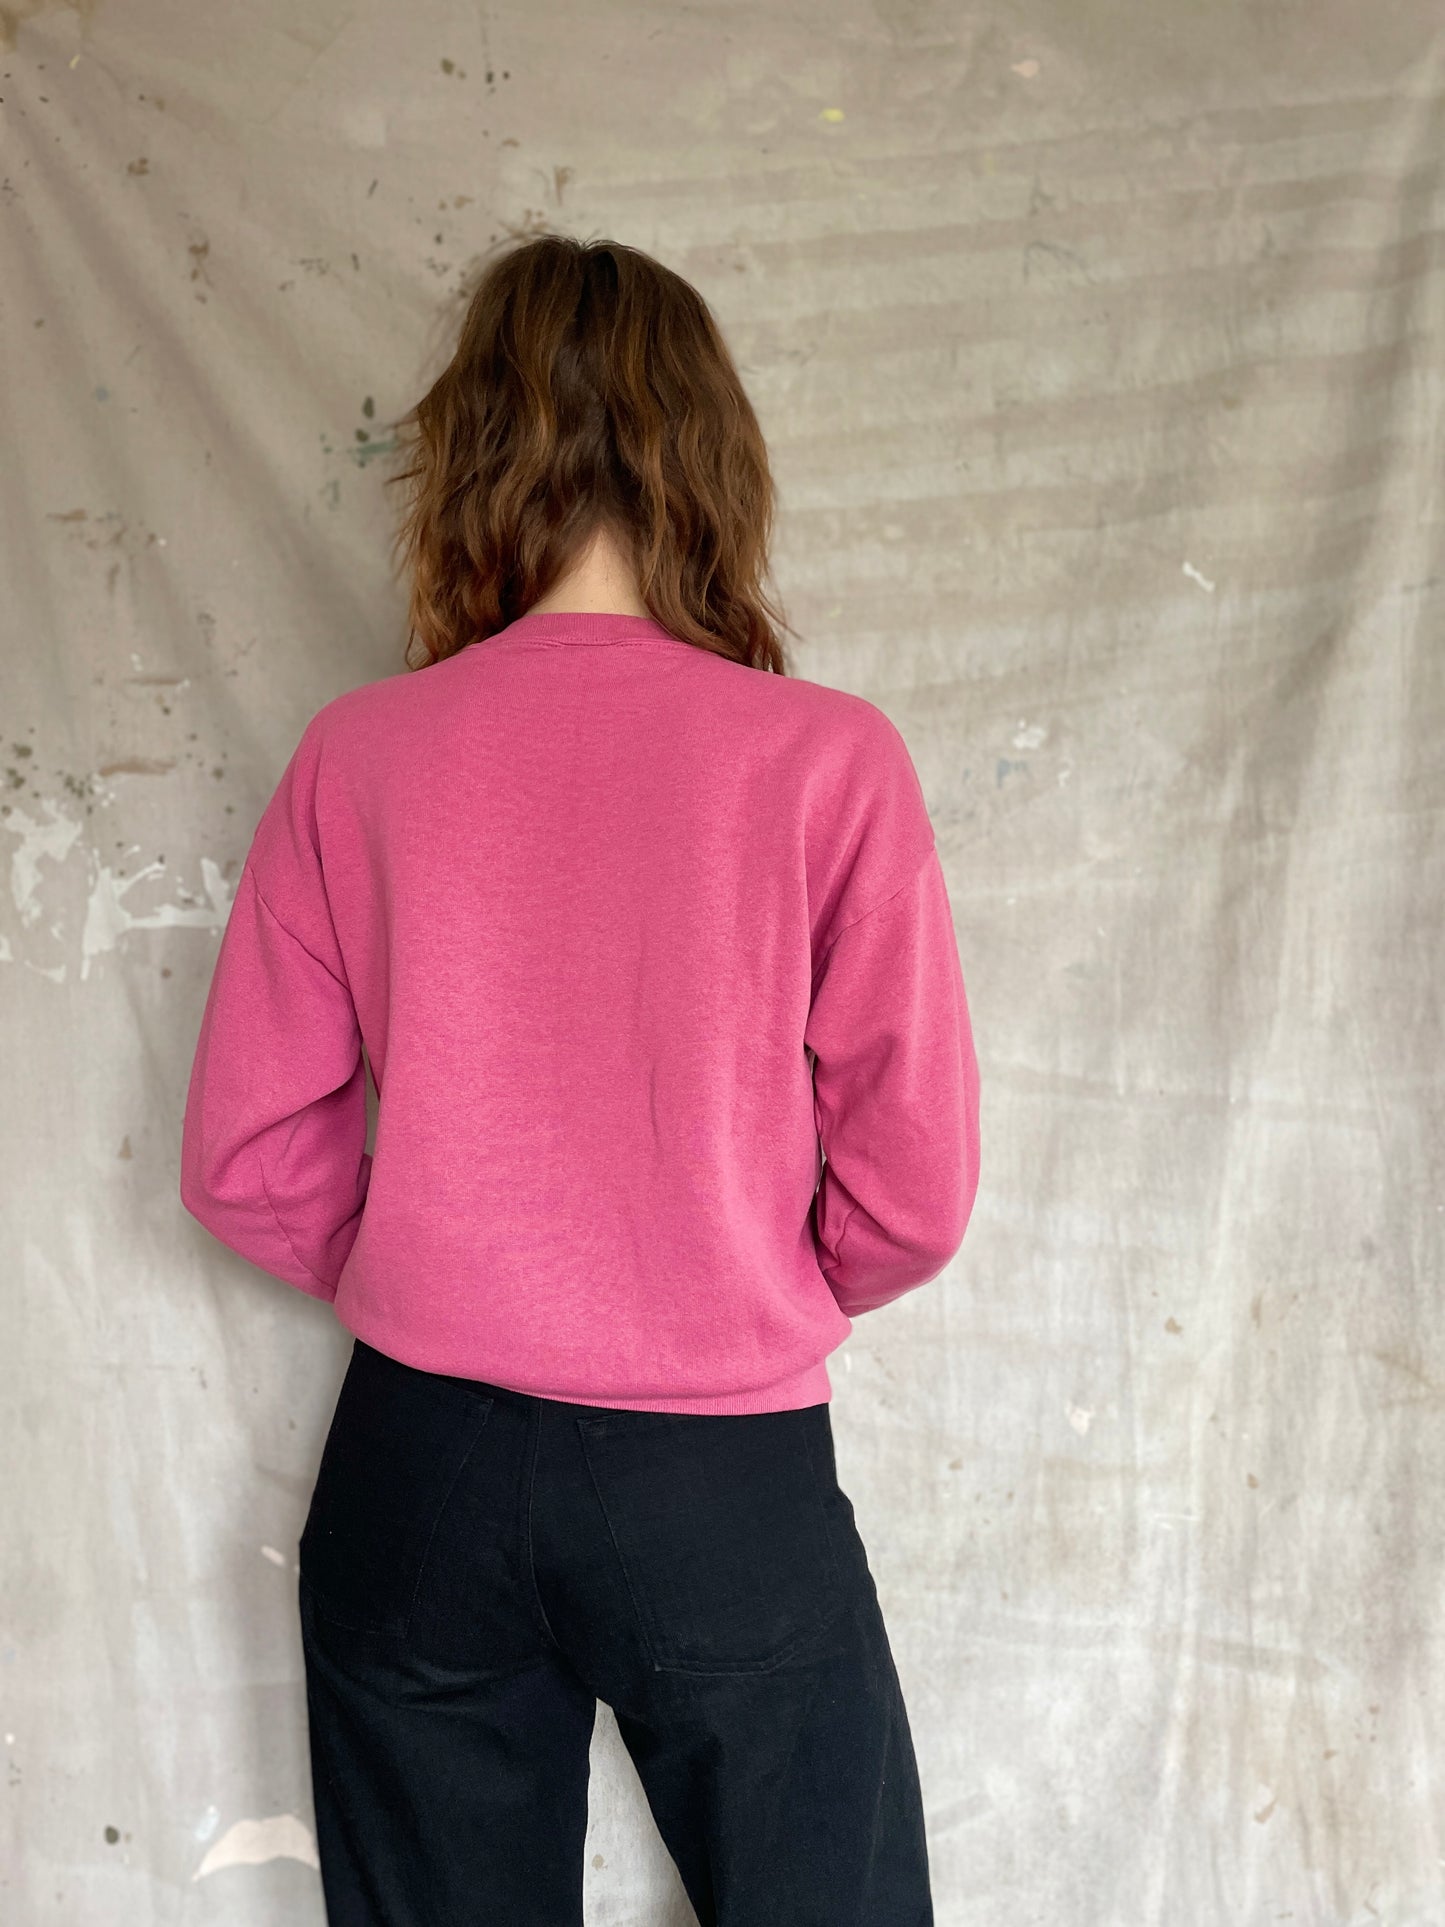 90s Blank Pink Sweatshirt